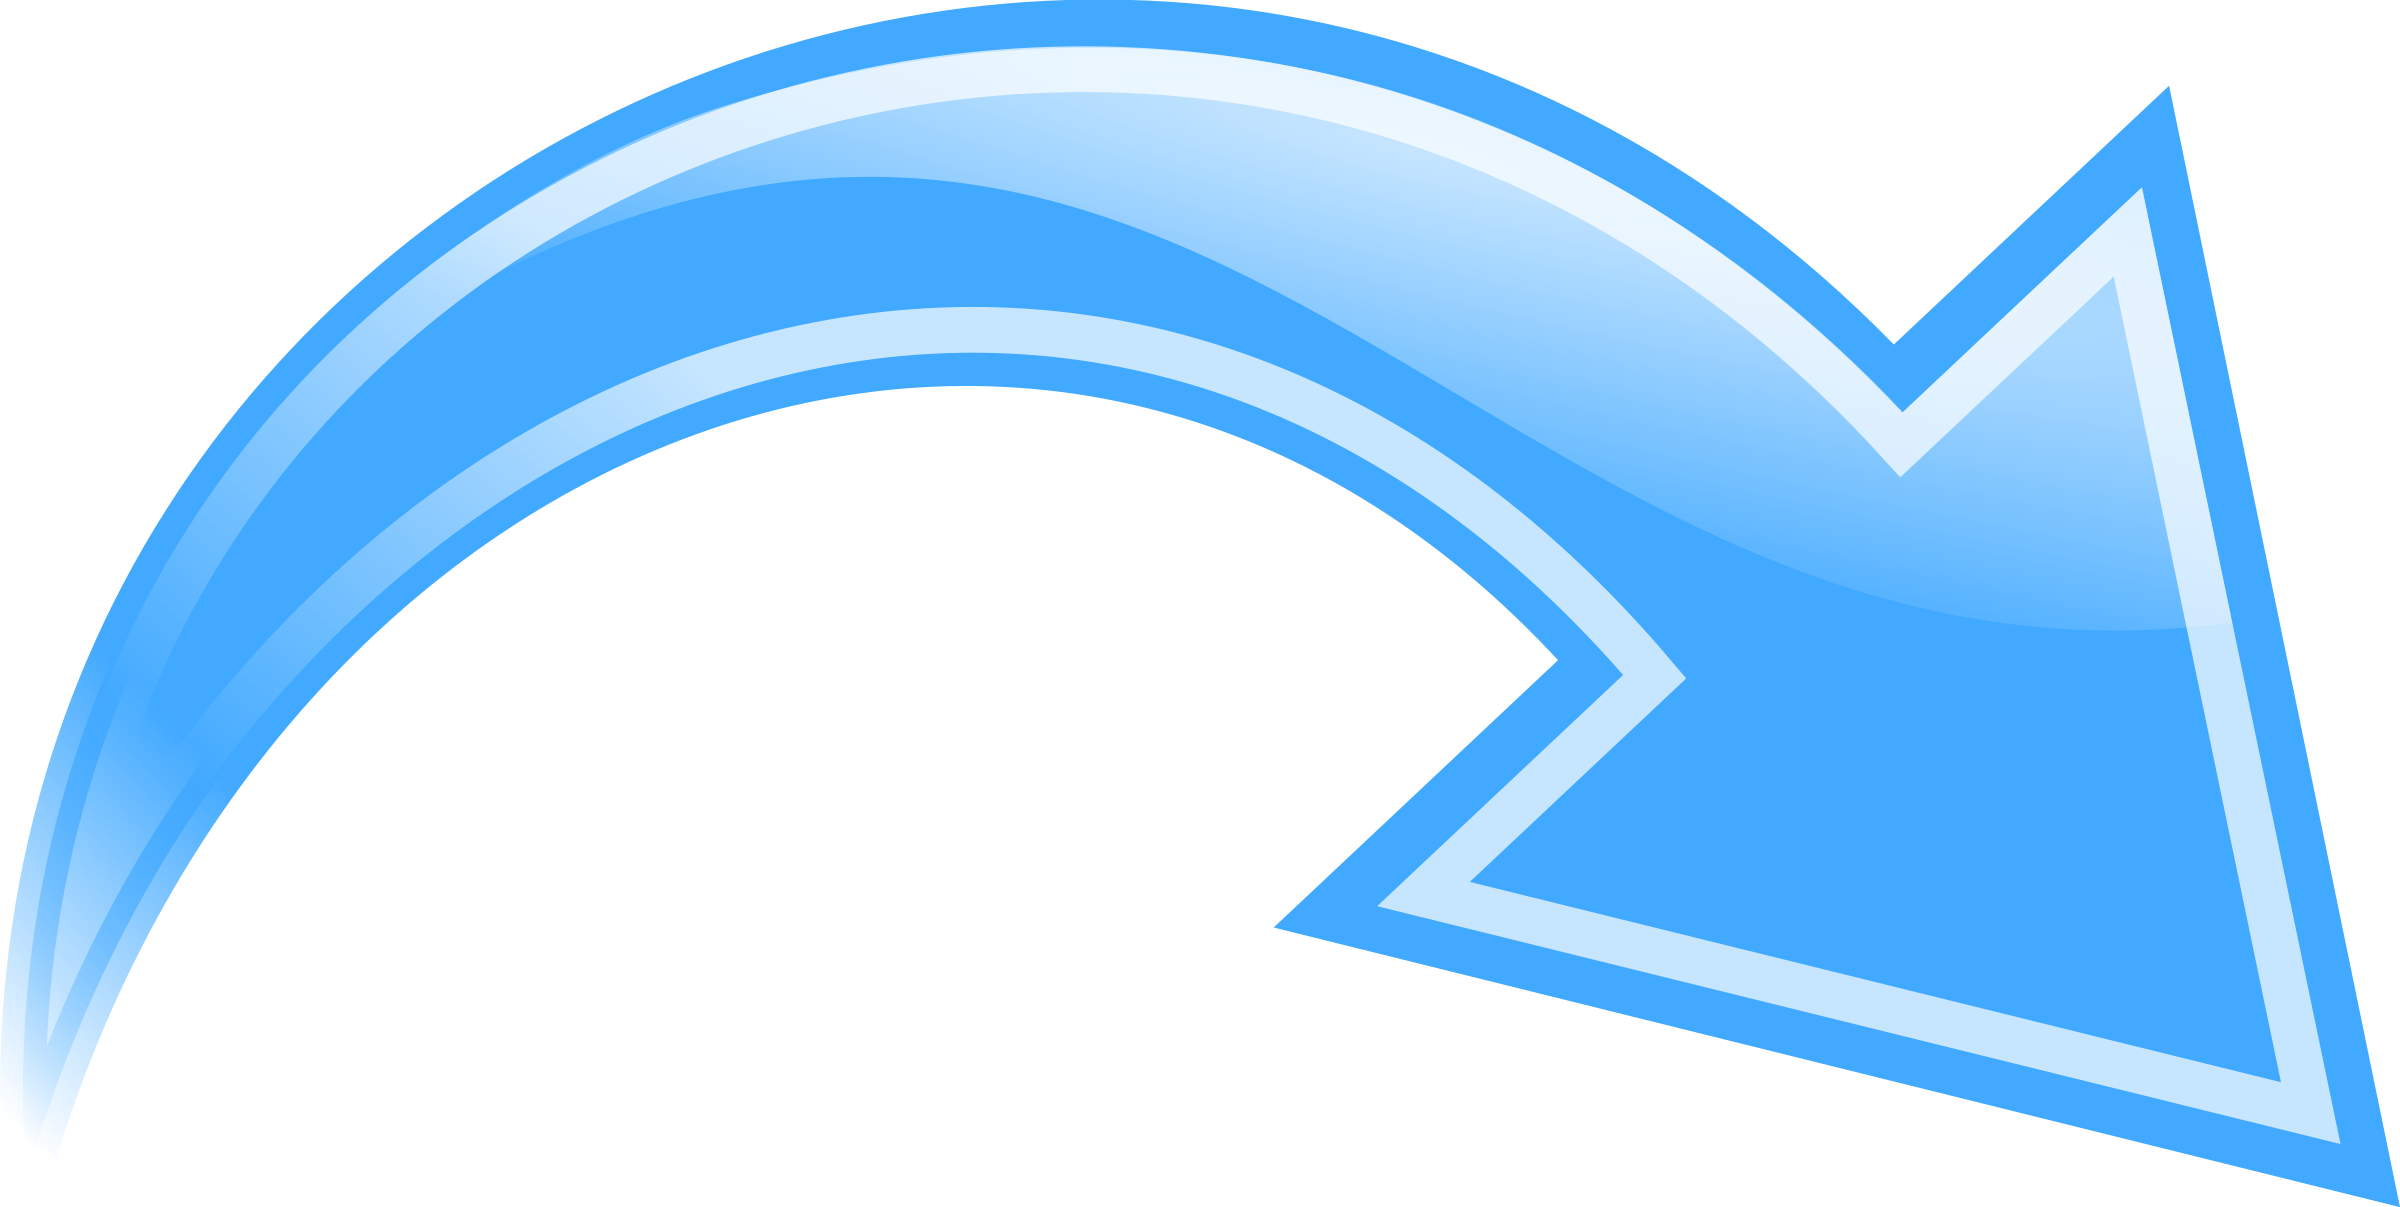 Curved Arrow, Blue SVG Clip arts